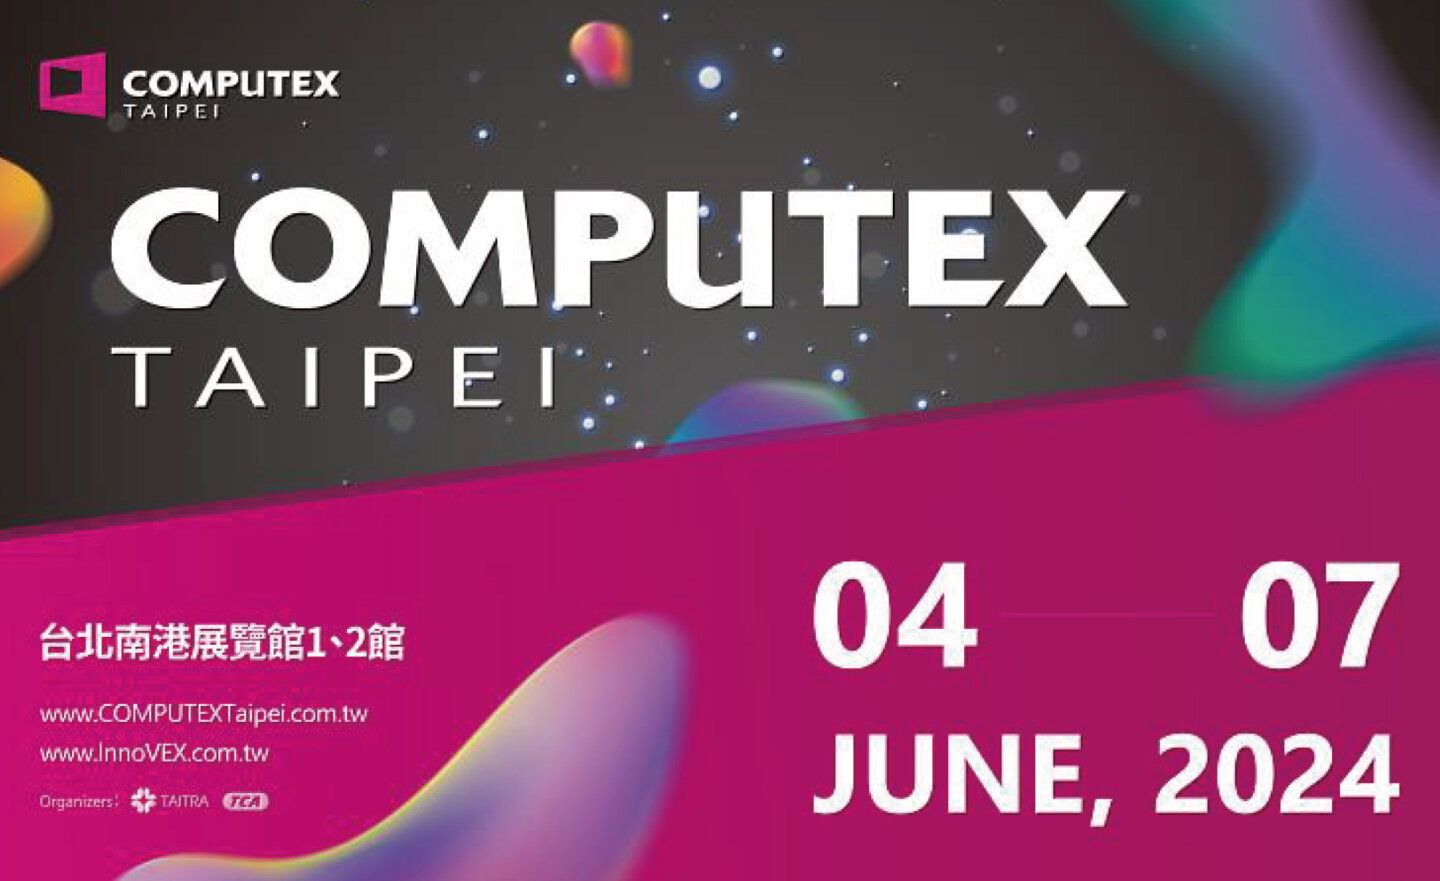 【COMPUTEX 2024】台北國際電腦展 6/4 開跑！匯聚全球1,500家廠商聚焦 AI，即日起開放預登參觀